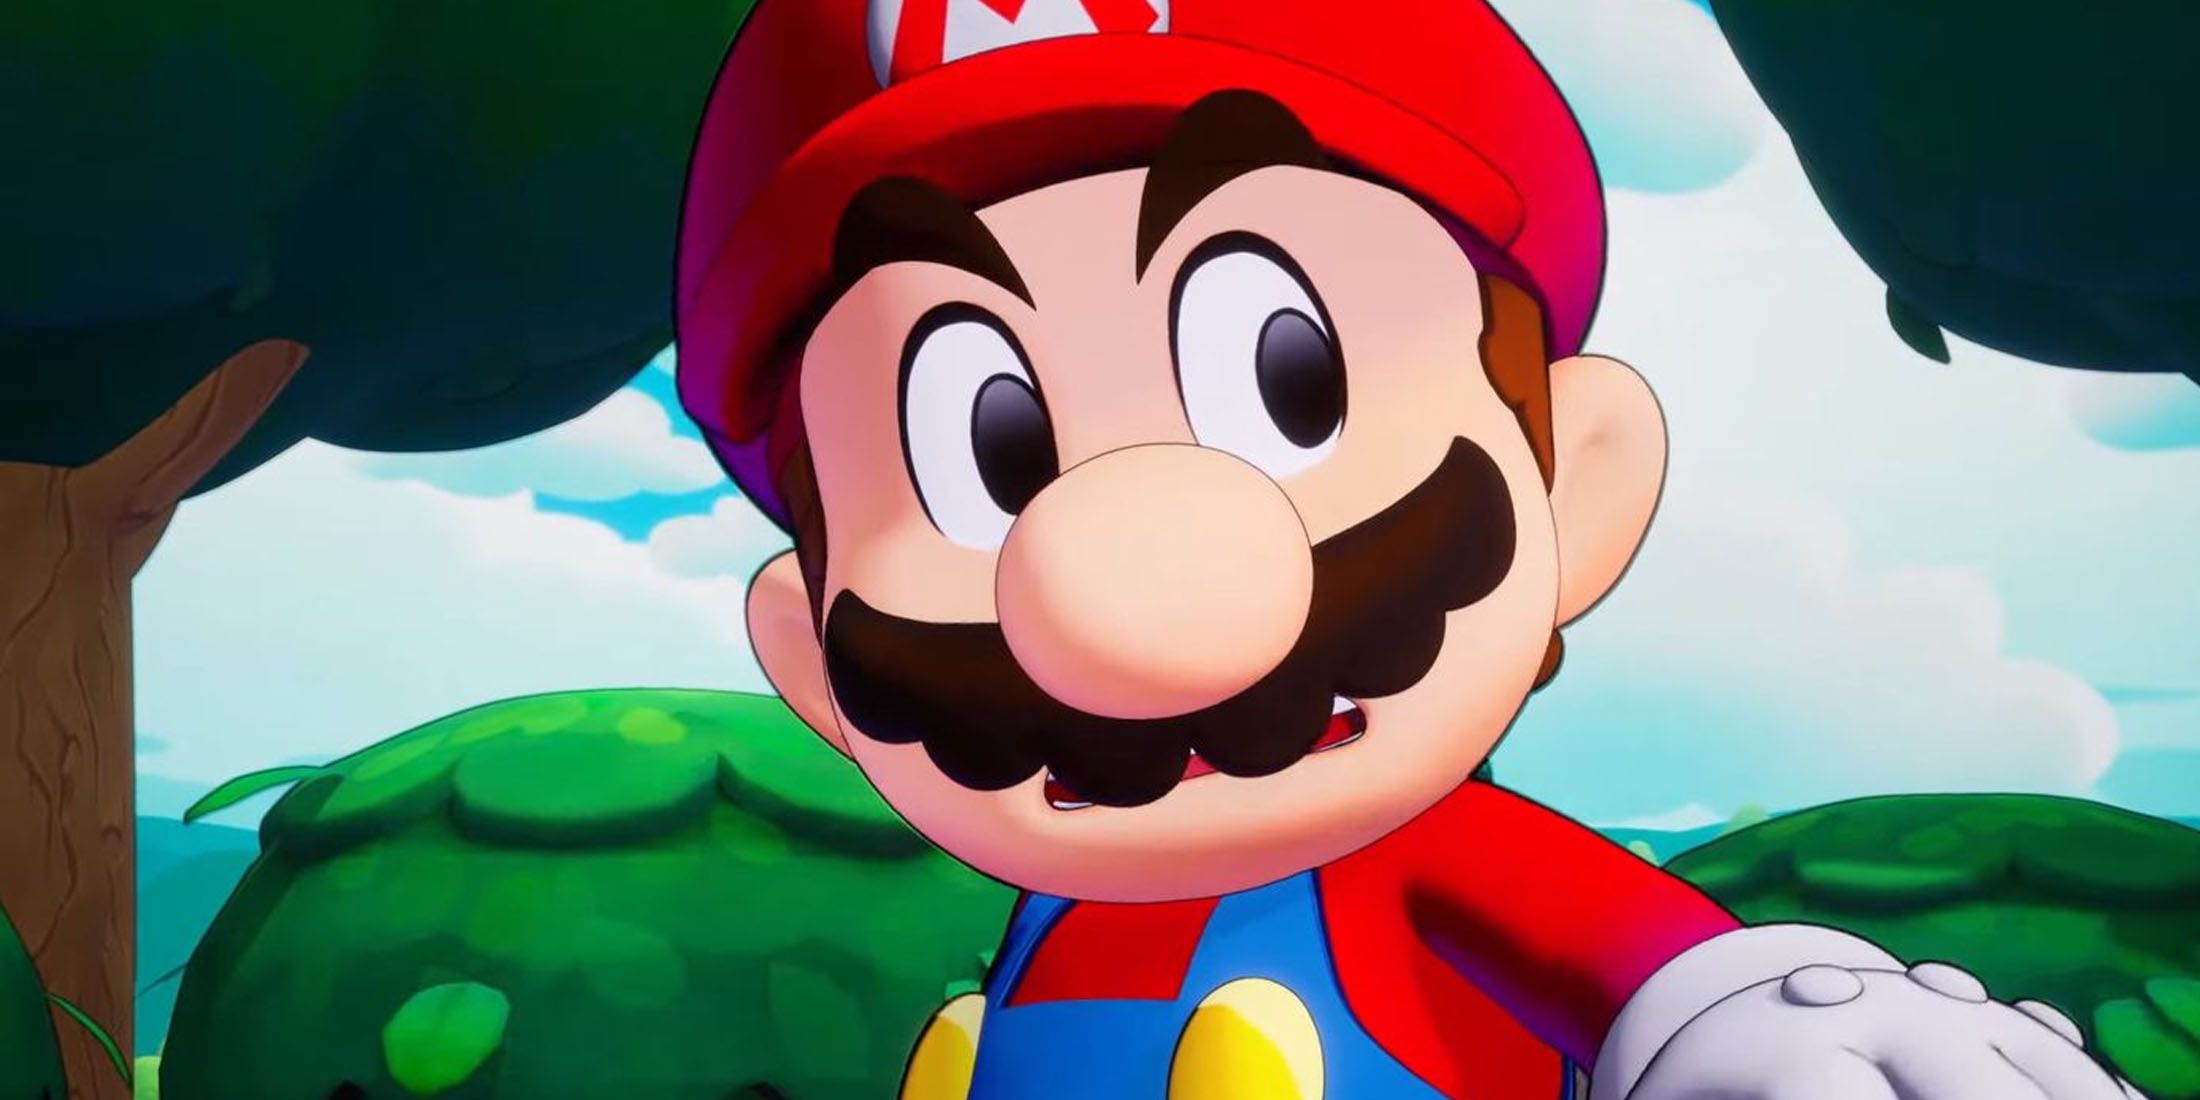 A screenshot of Mario in Mario and Luigi: Brothership.